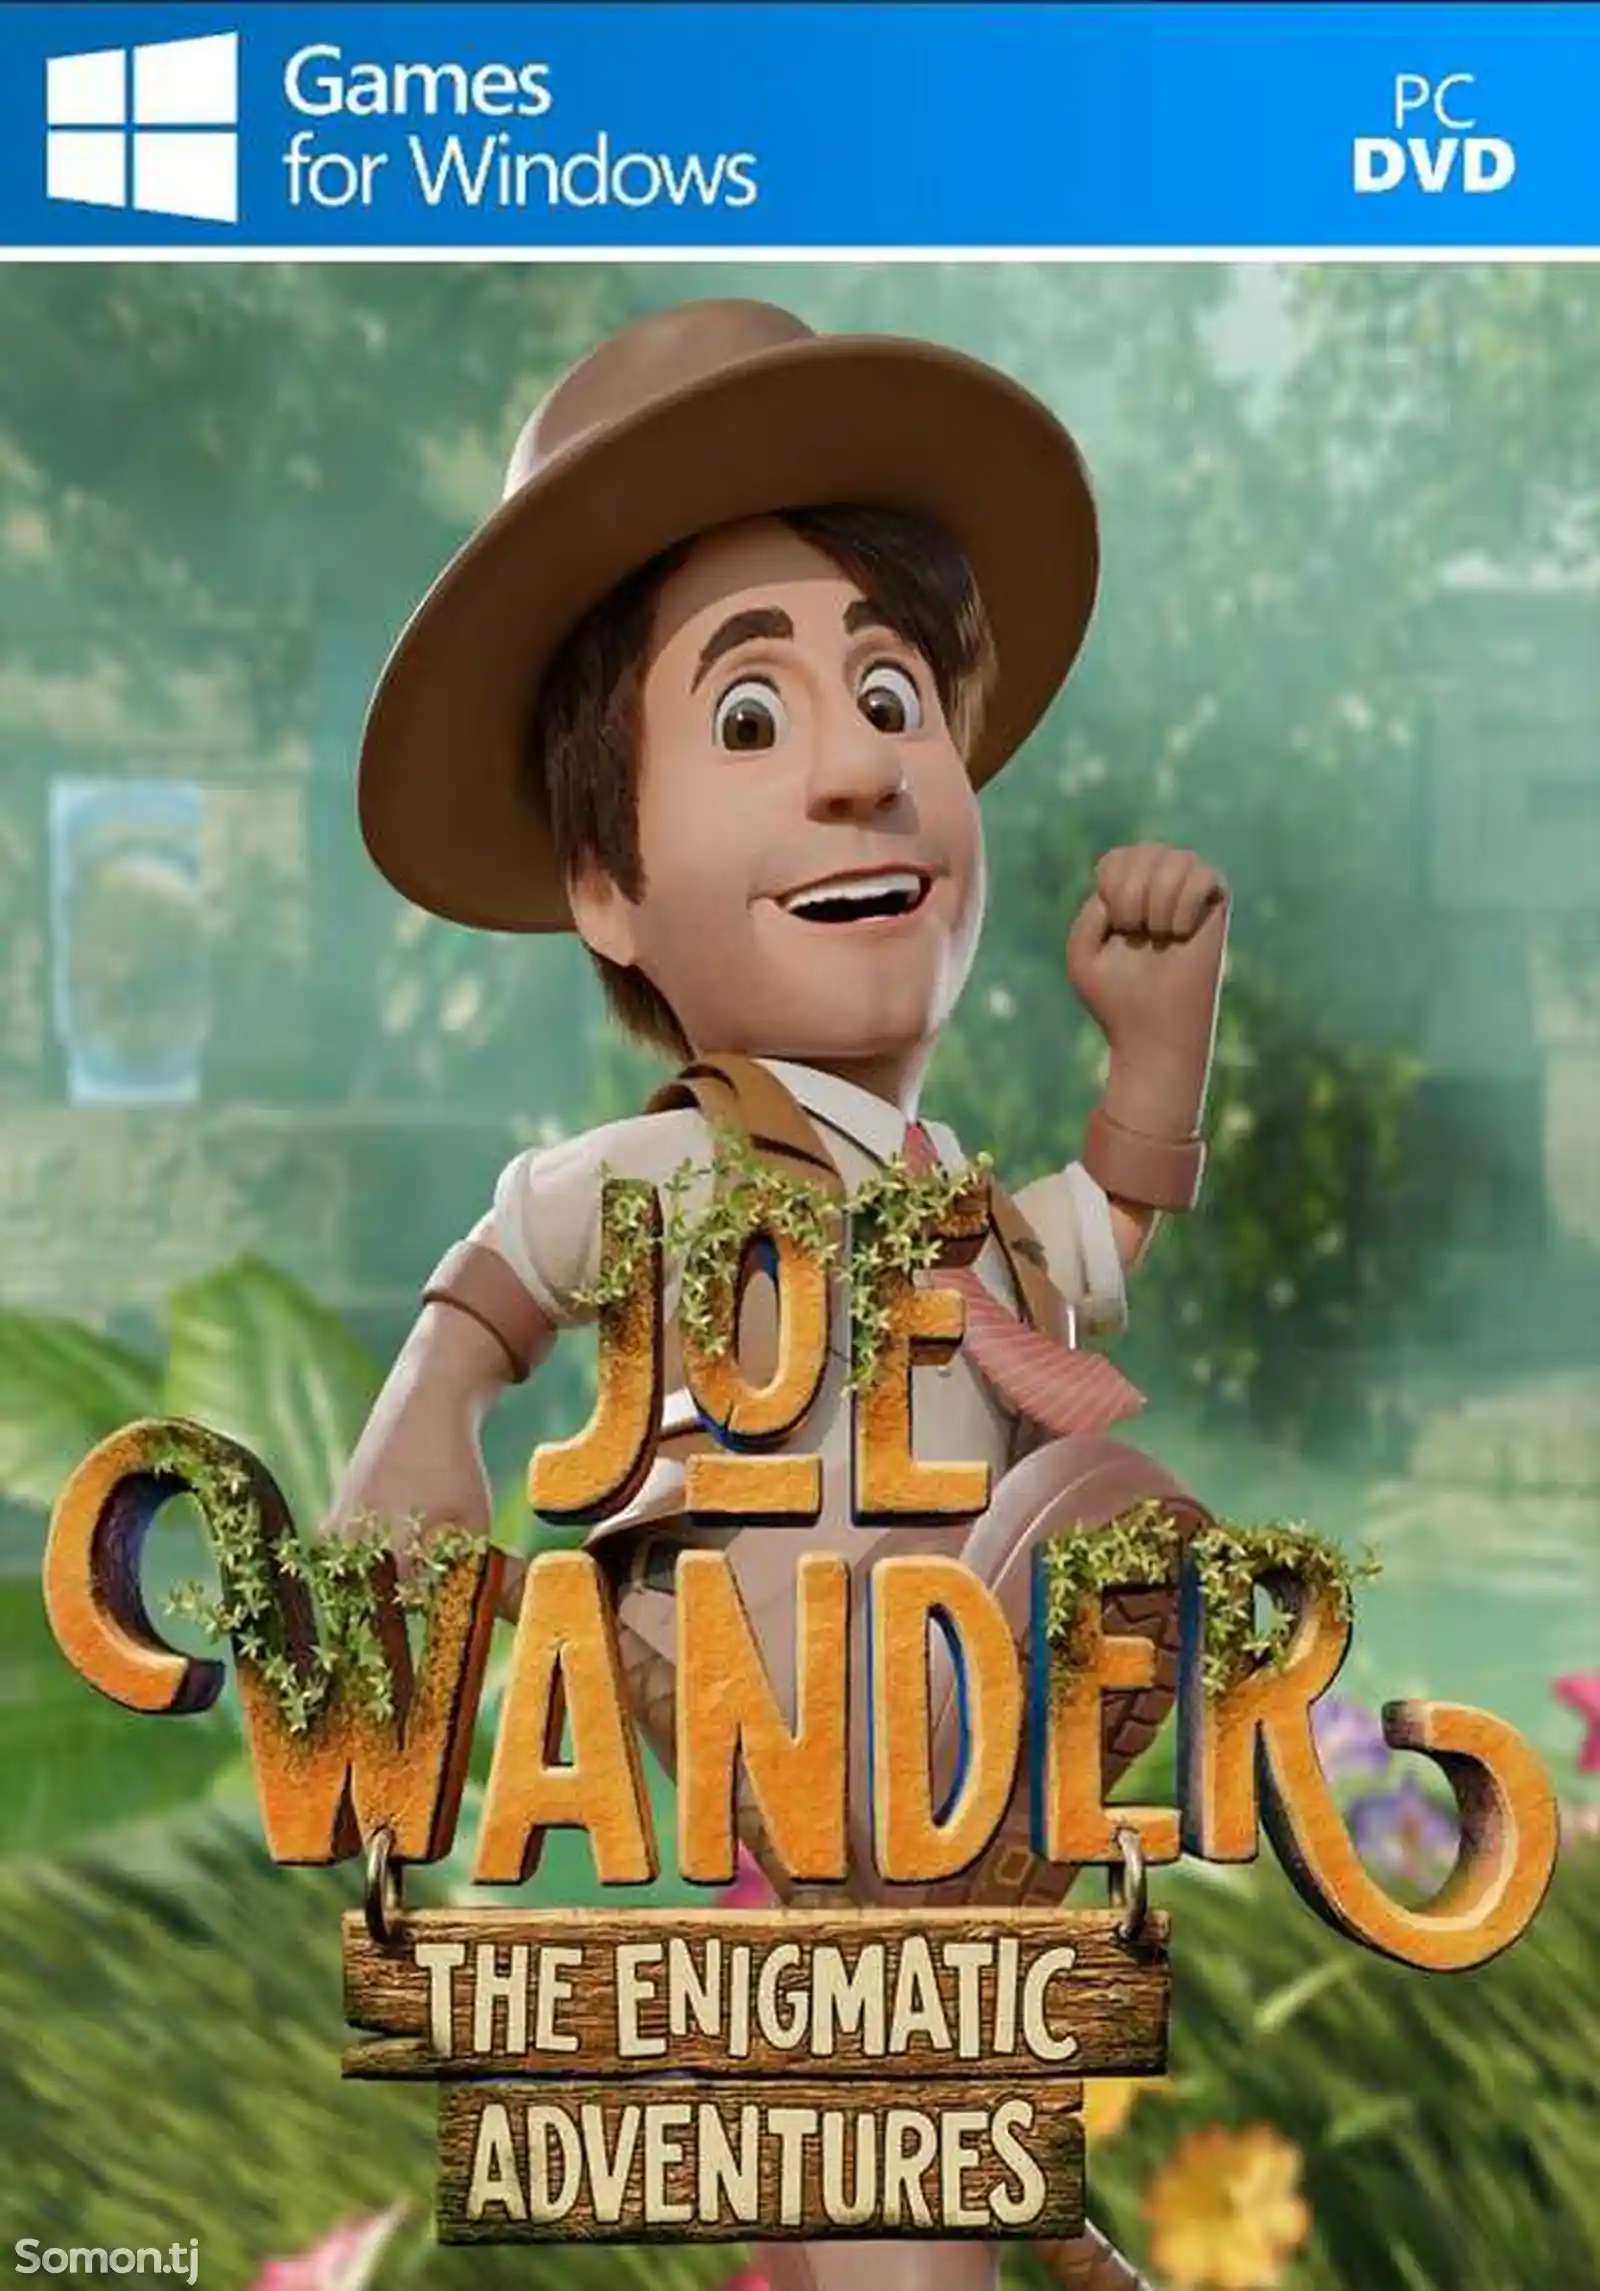 Игра Joe wander and the enigmatic adventures для компьютера-пк-pc-1